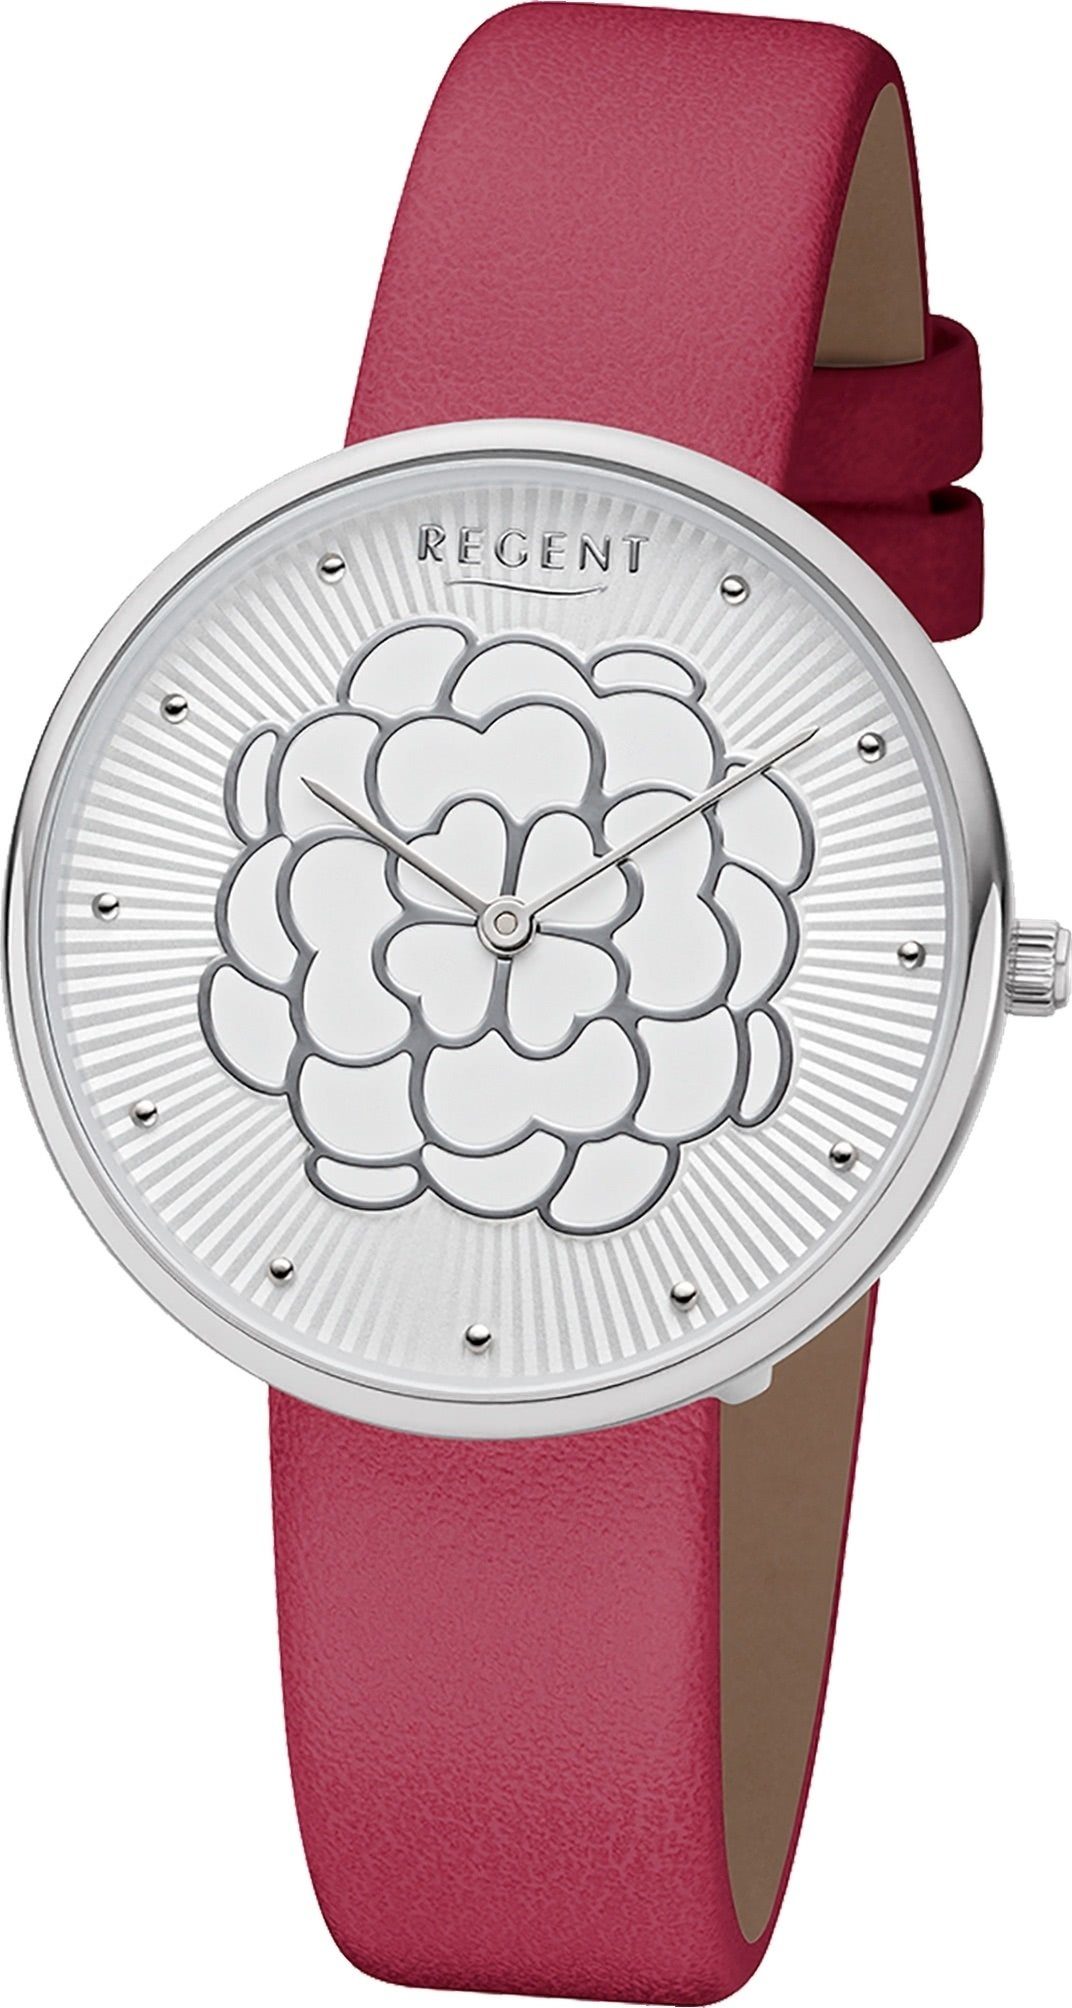 Regent Quarzuhr Regent Leder Damen Uhr BA-602 Armbanduhr, Damenuhr Lederarmband rot, rundes Gehäuse, mittel (ca. 36mm)